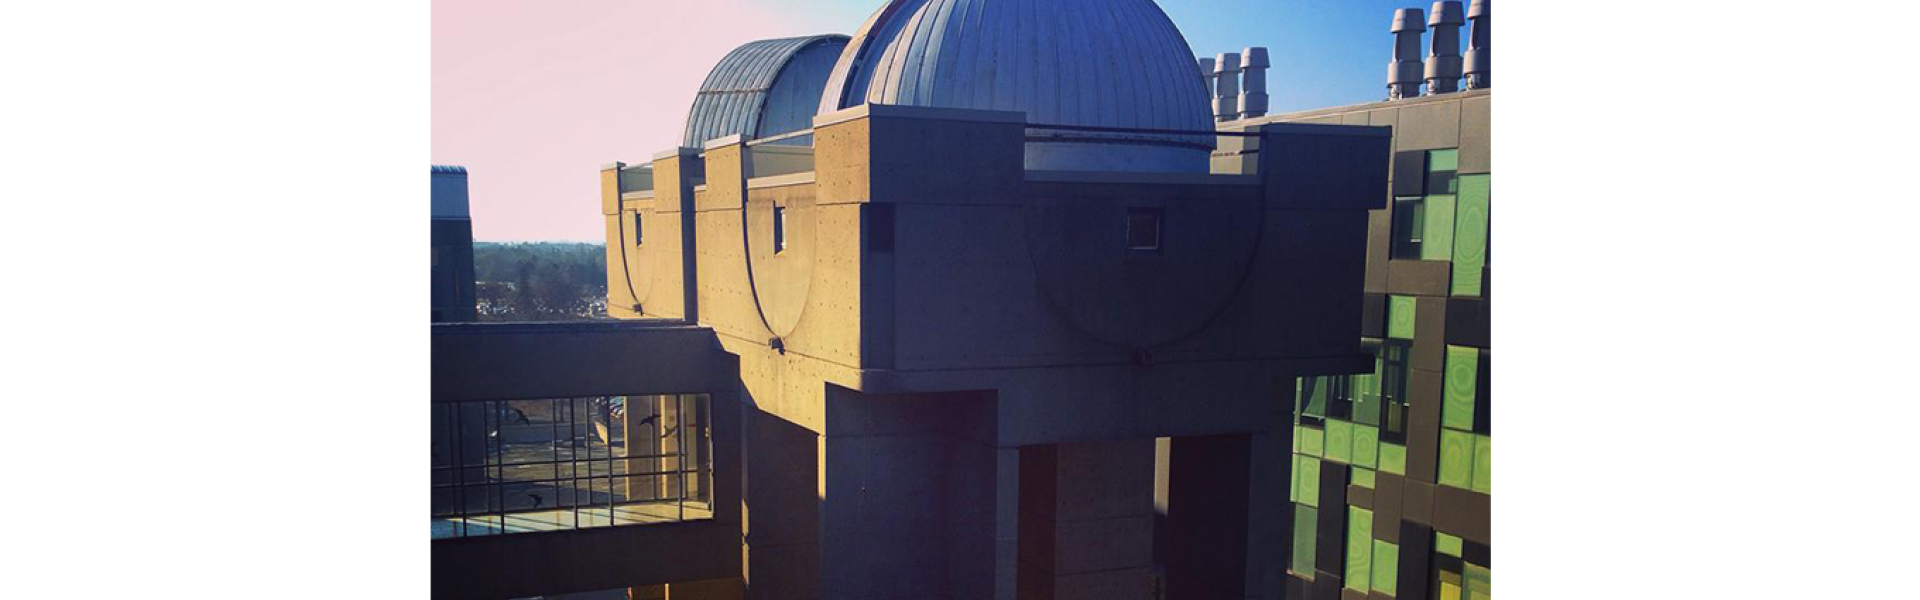 York University Allan I. Carswell Observatory